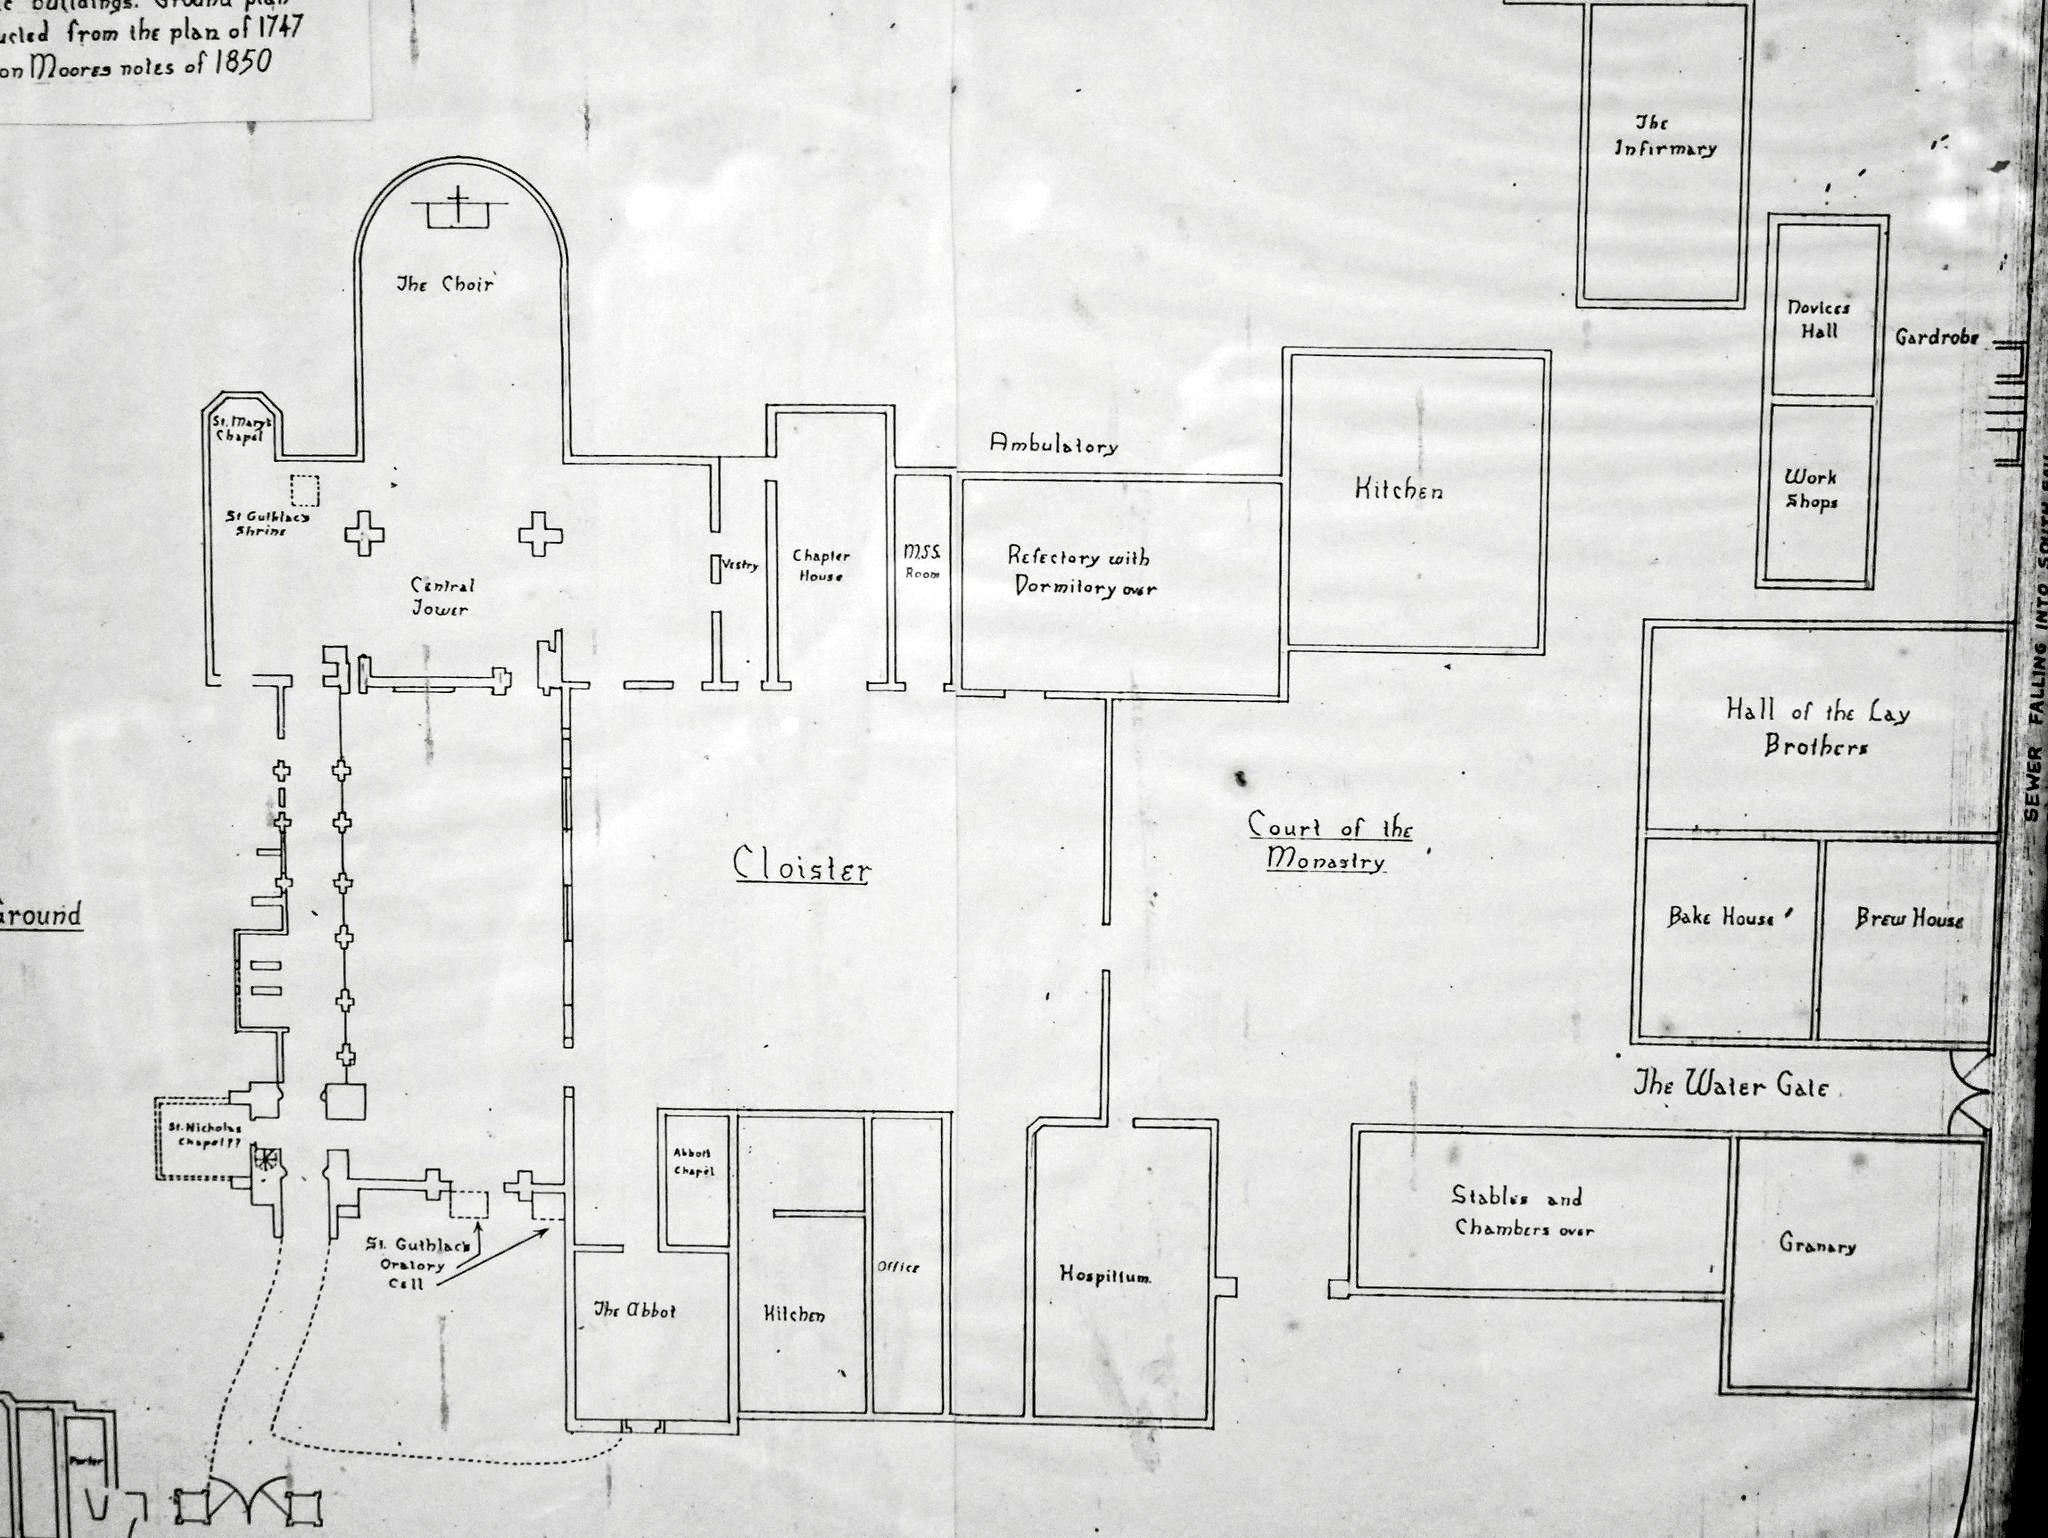 Crowland Abbey floor plan